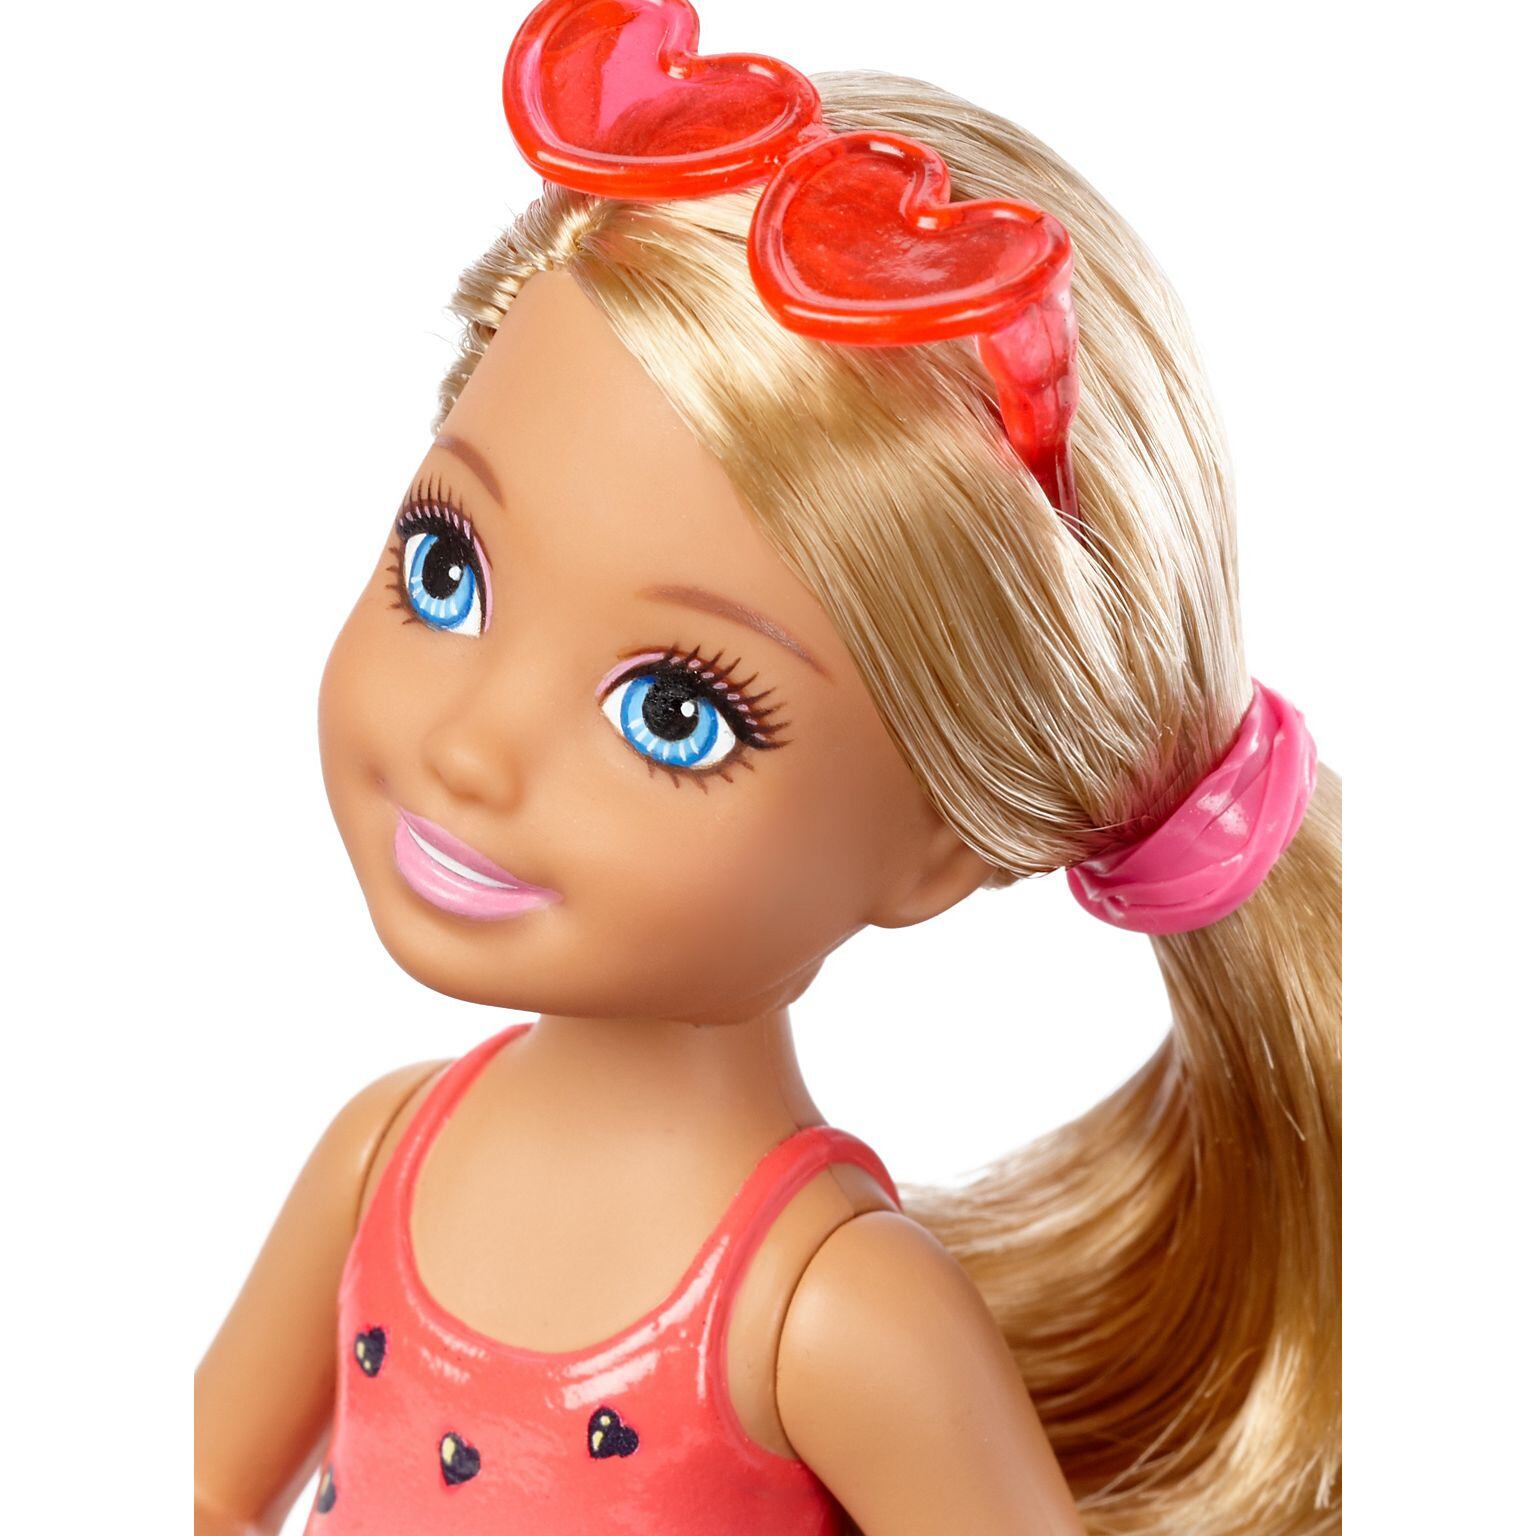 clubチェルシー スイミング~ 《barbie doll》 Grairou's import in